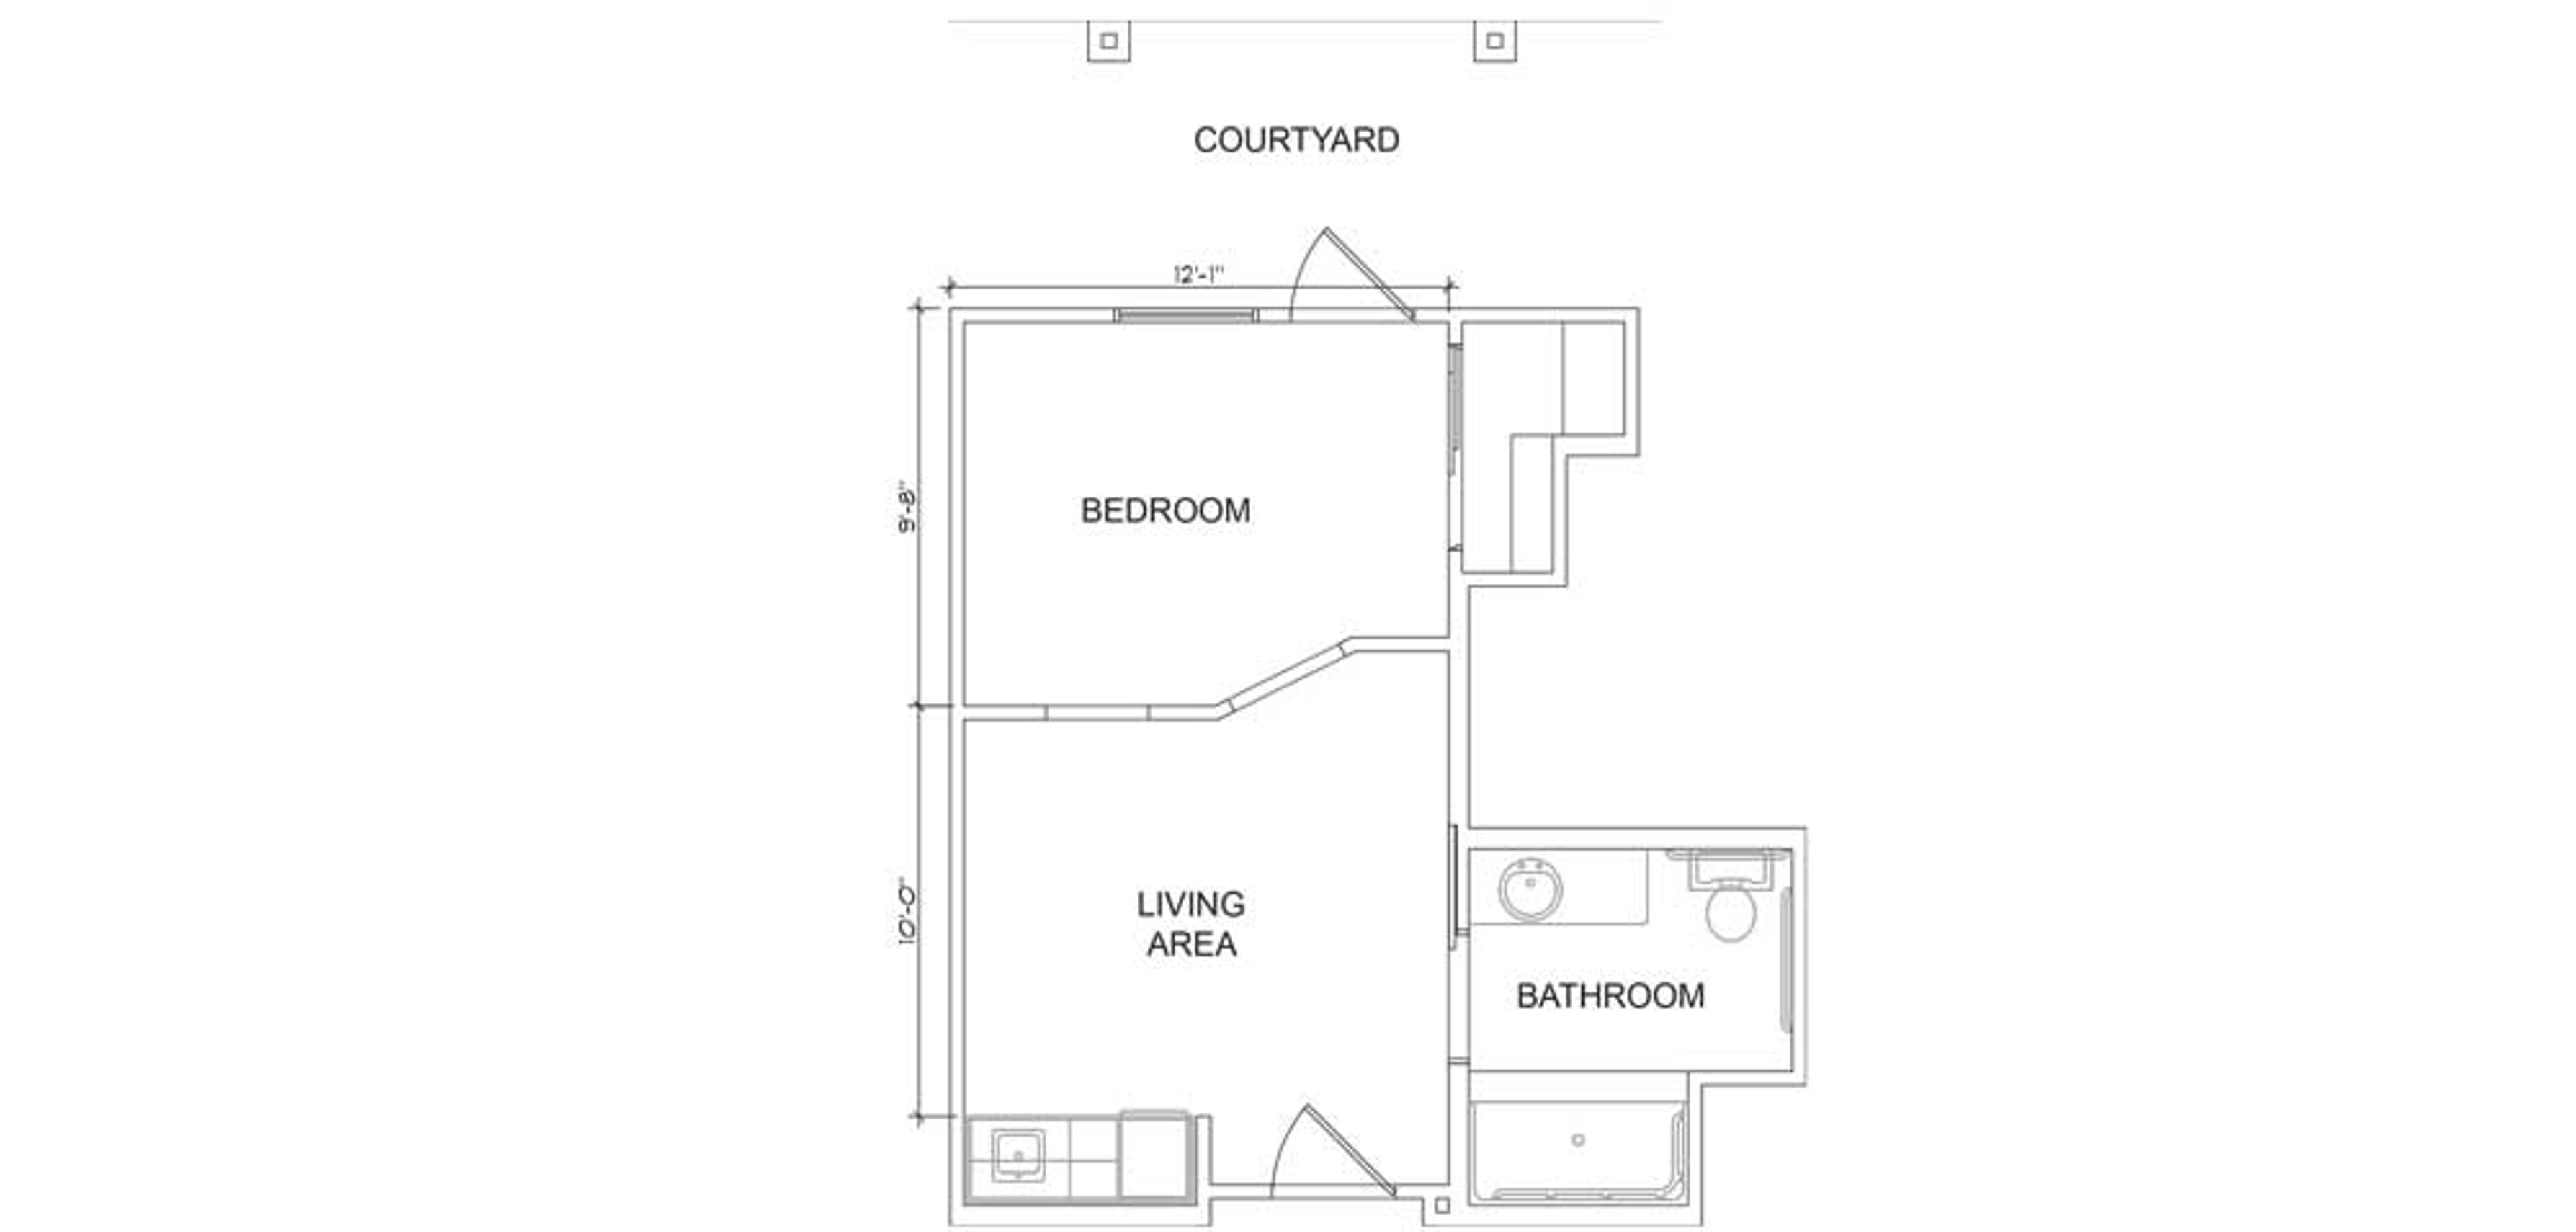 Floorplan - Azalea Trails - 1B 1B Courtyard Assisted Living